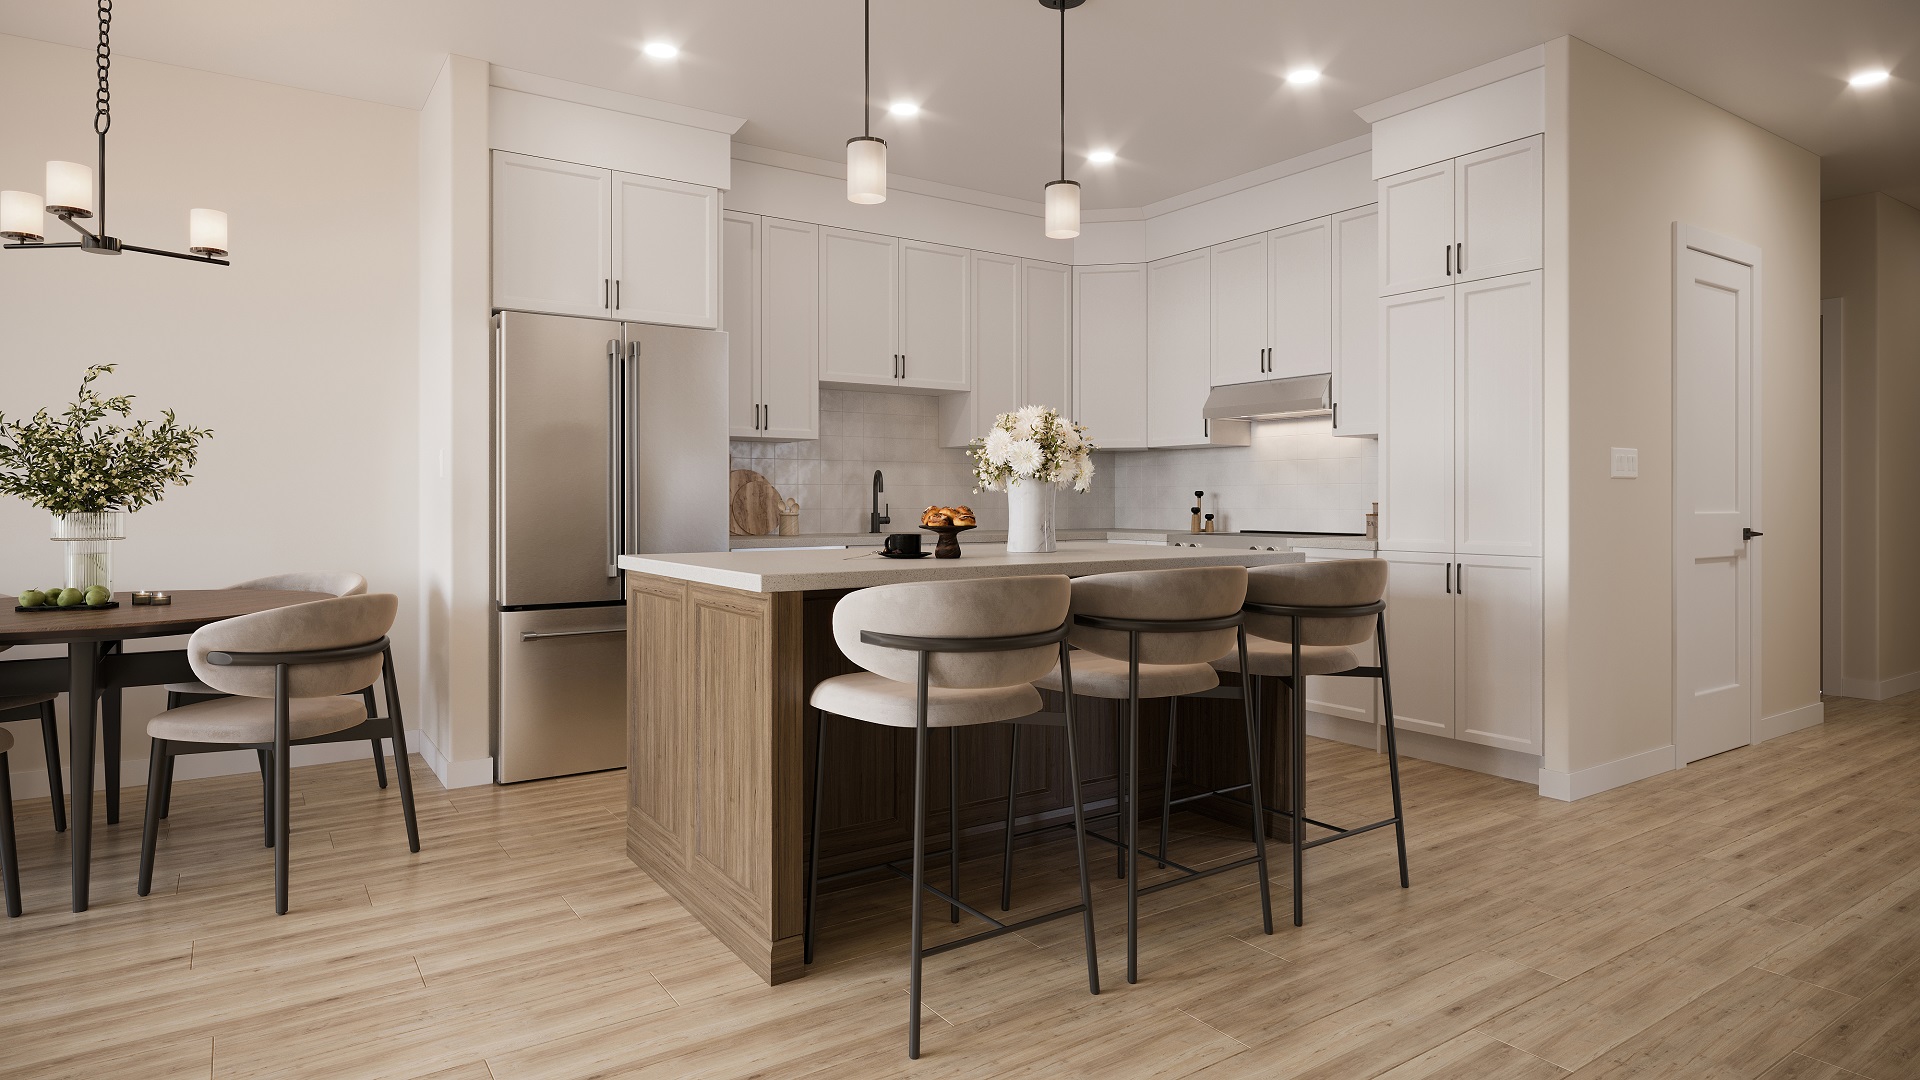 Energy-efficient Homes 3D Rendering: Elegant Kitchen